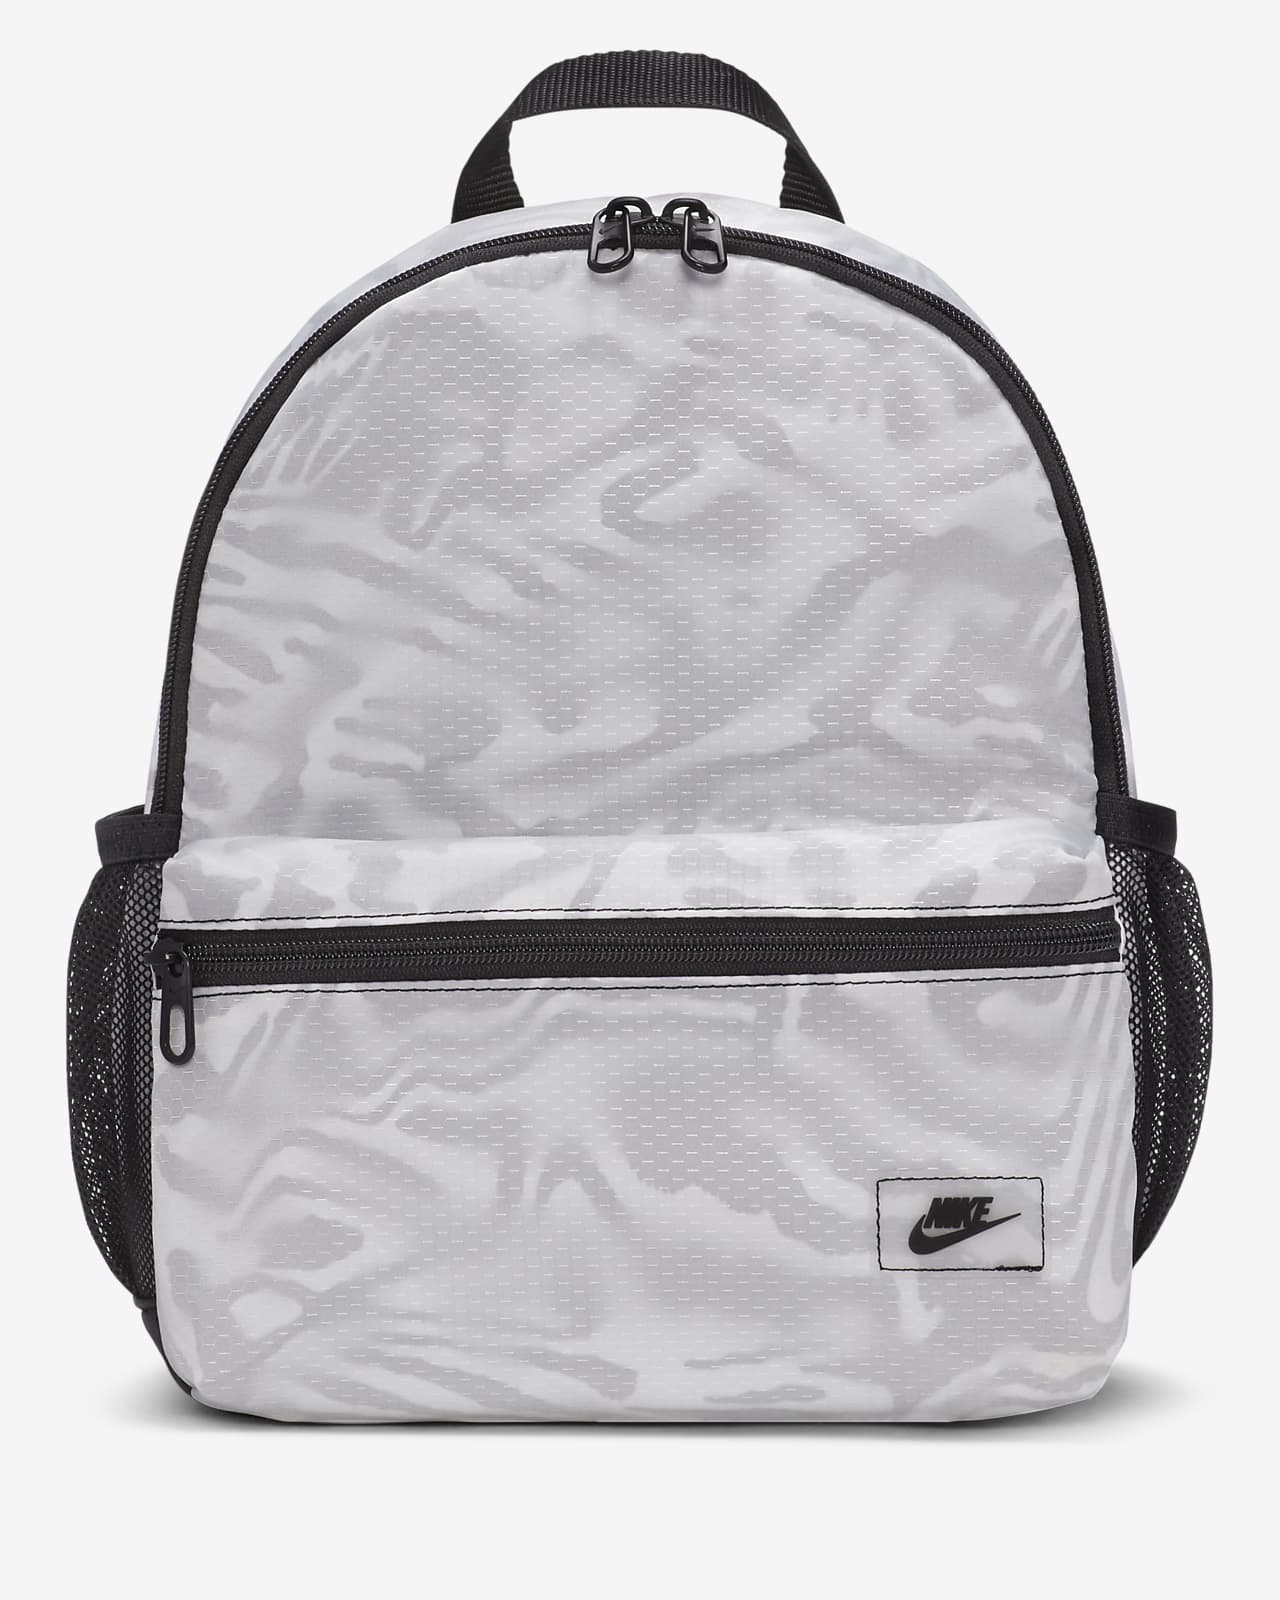 Mini mochila estampada para niños Nike Brasilia JDI